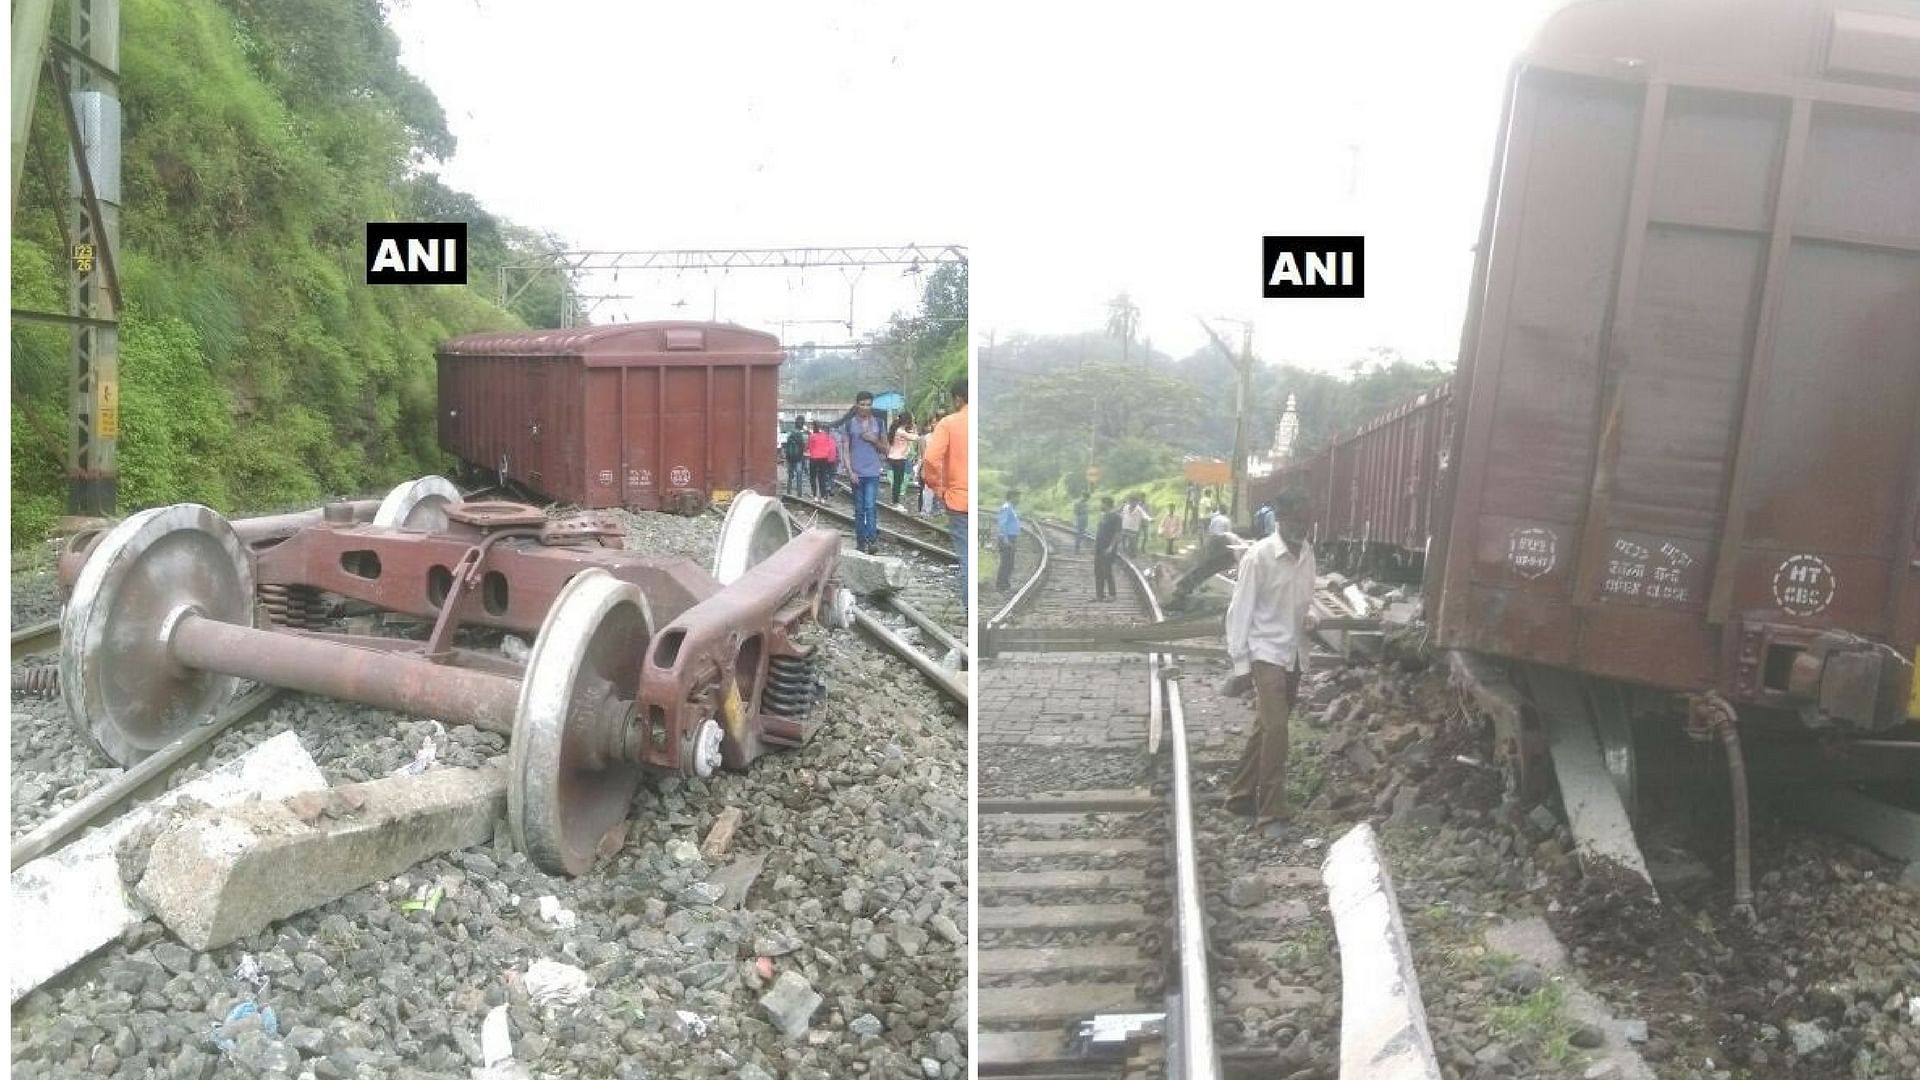 

Two wagons of a goods train derailed near Khandala on Thursday.